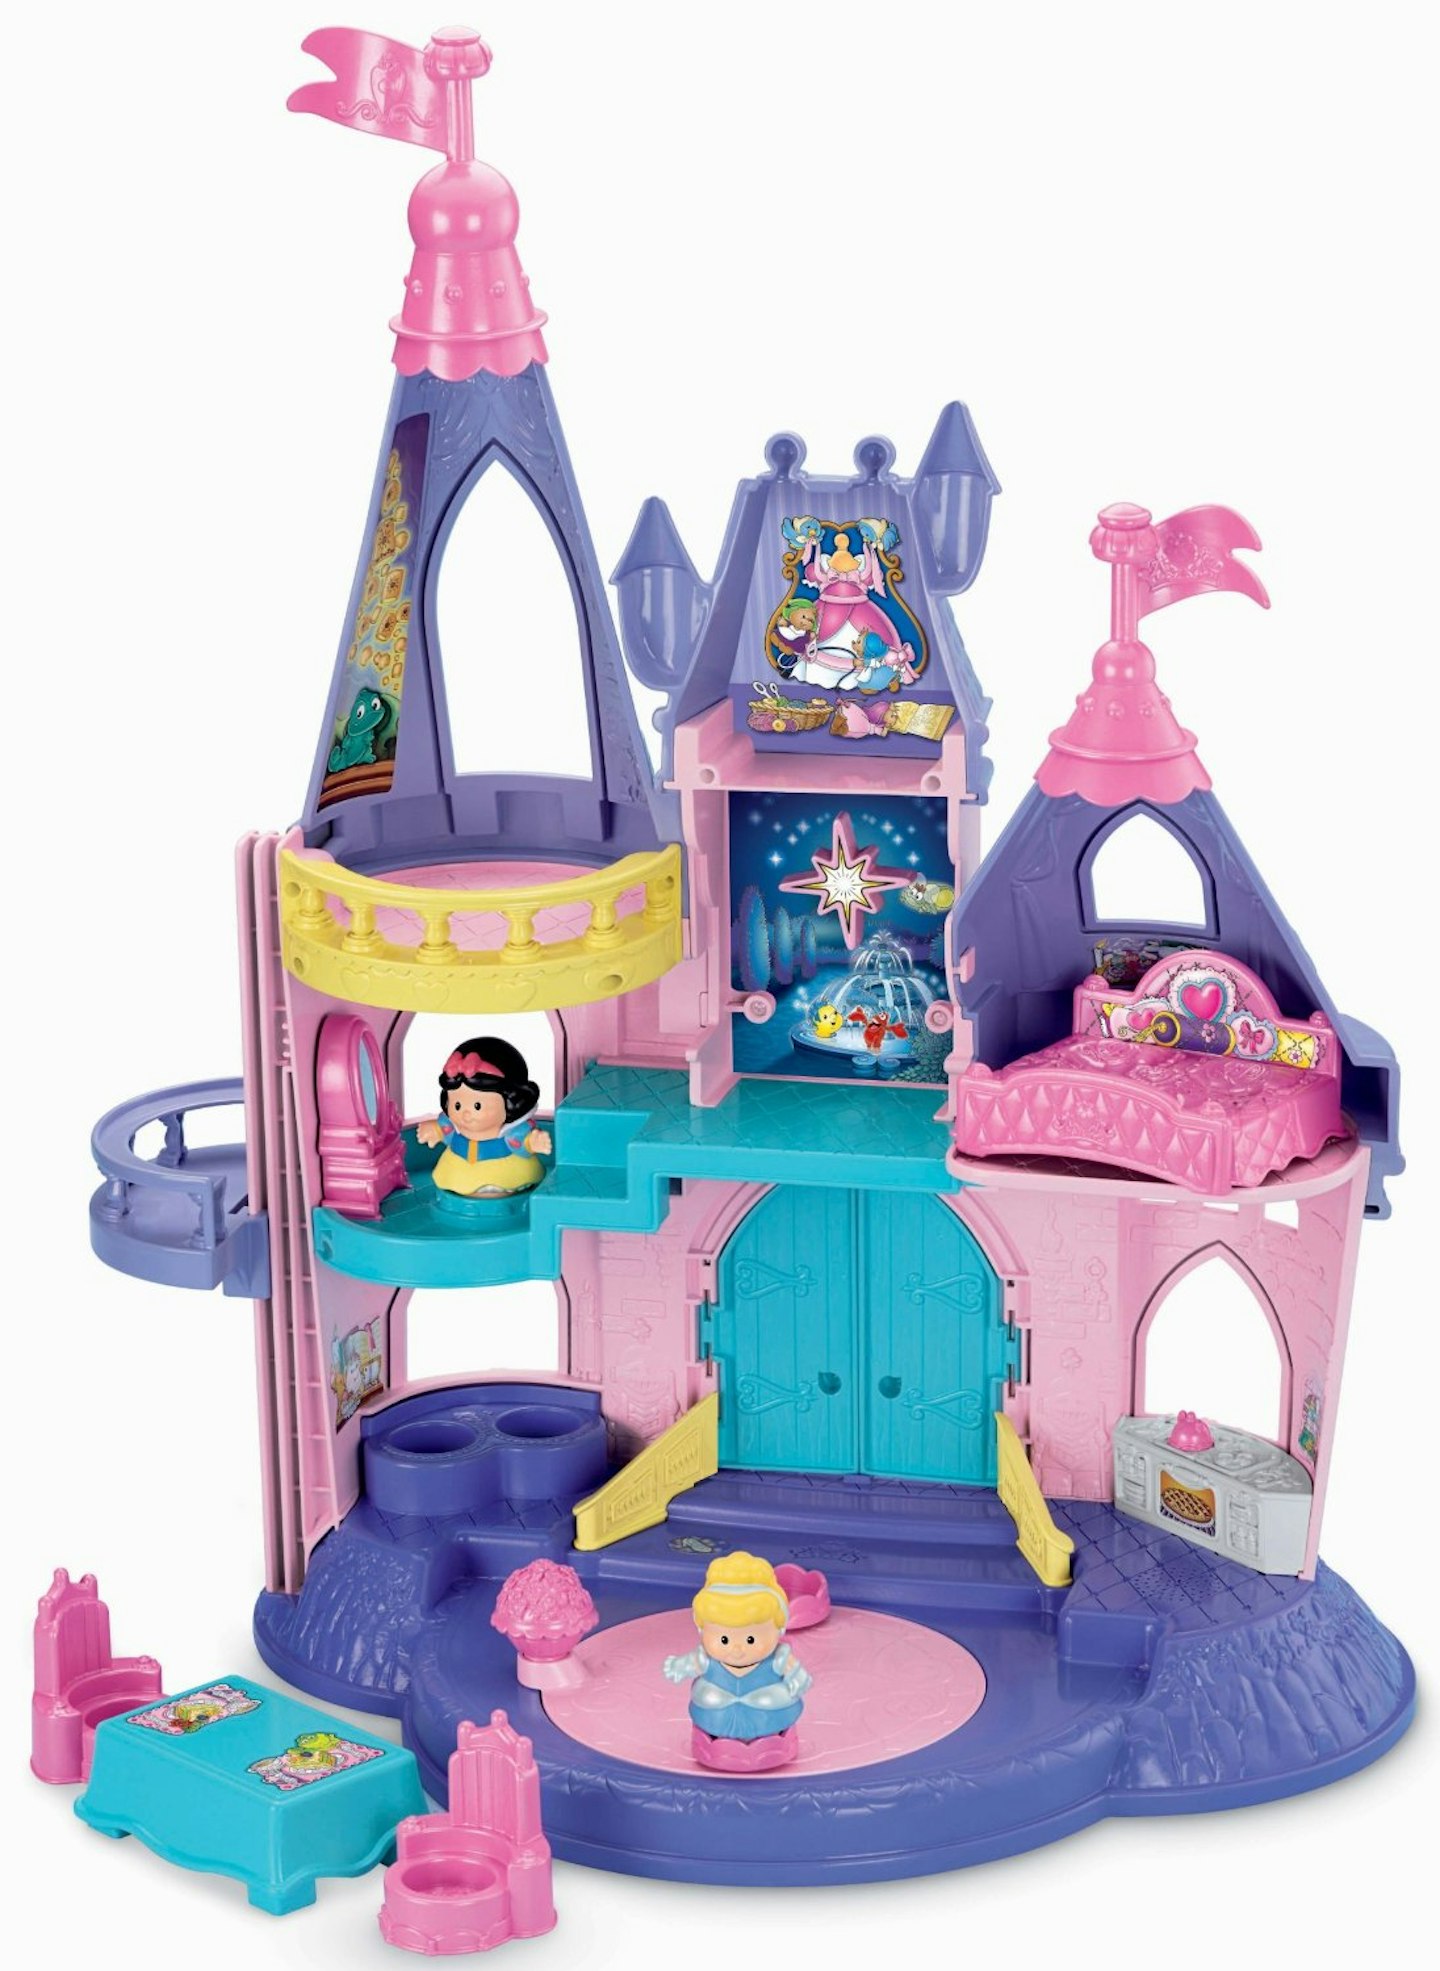 Fisher-Price Little People Disney Princess Castle Bundle